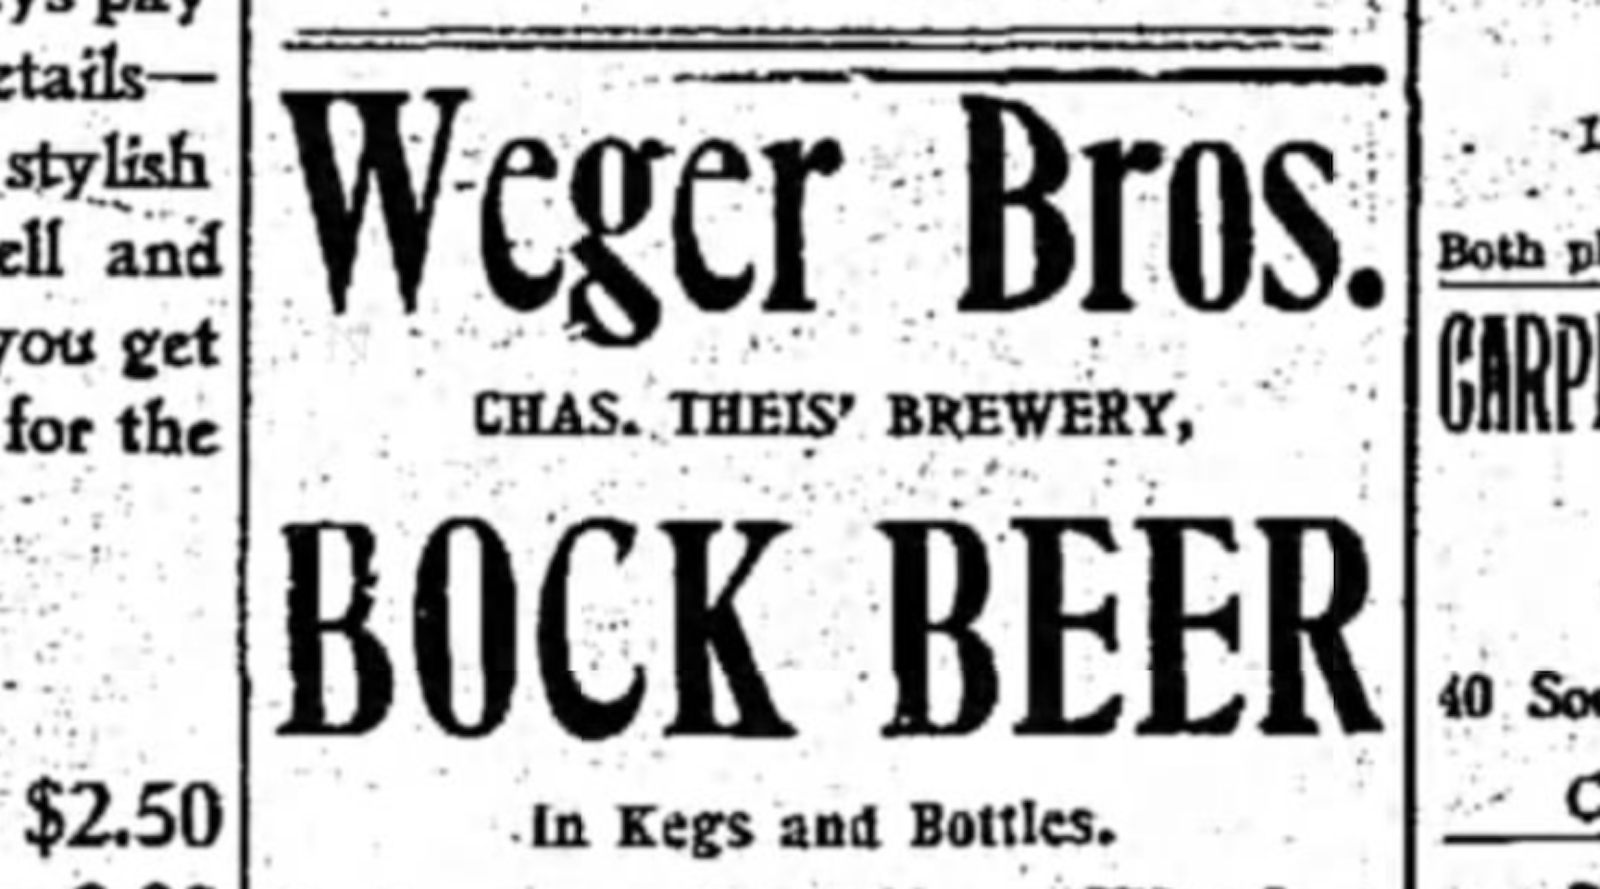 Weger Brothers American Bock 1909